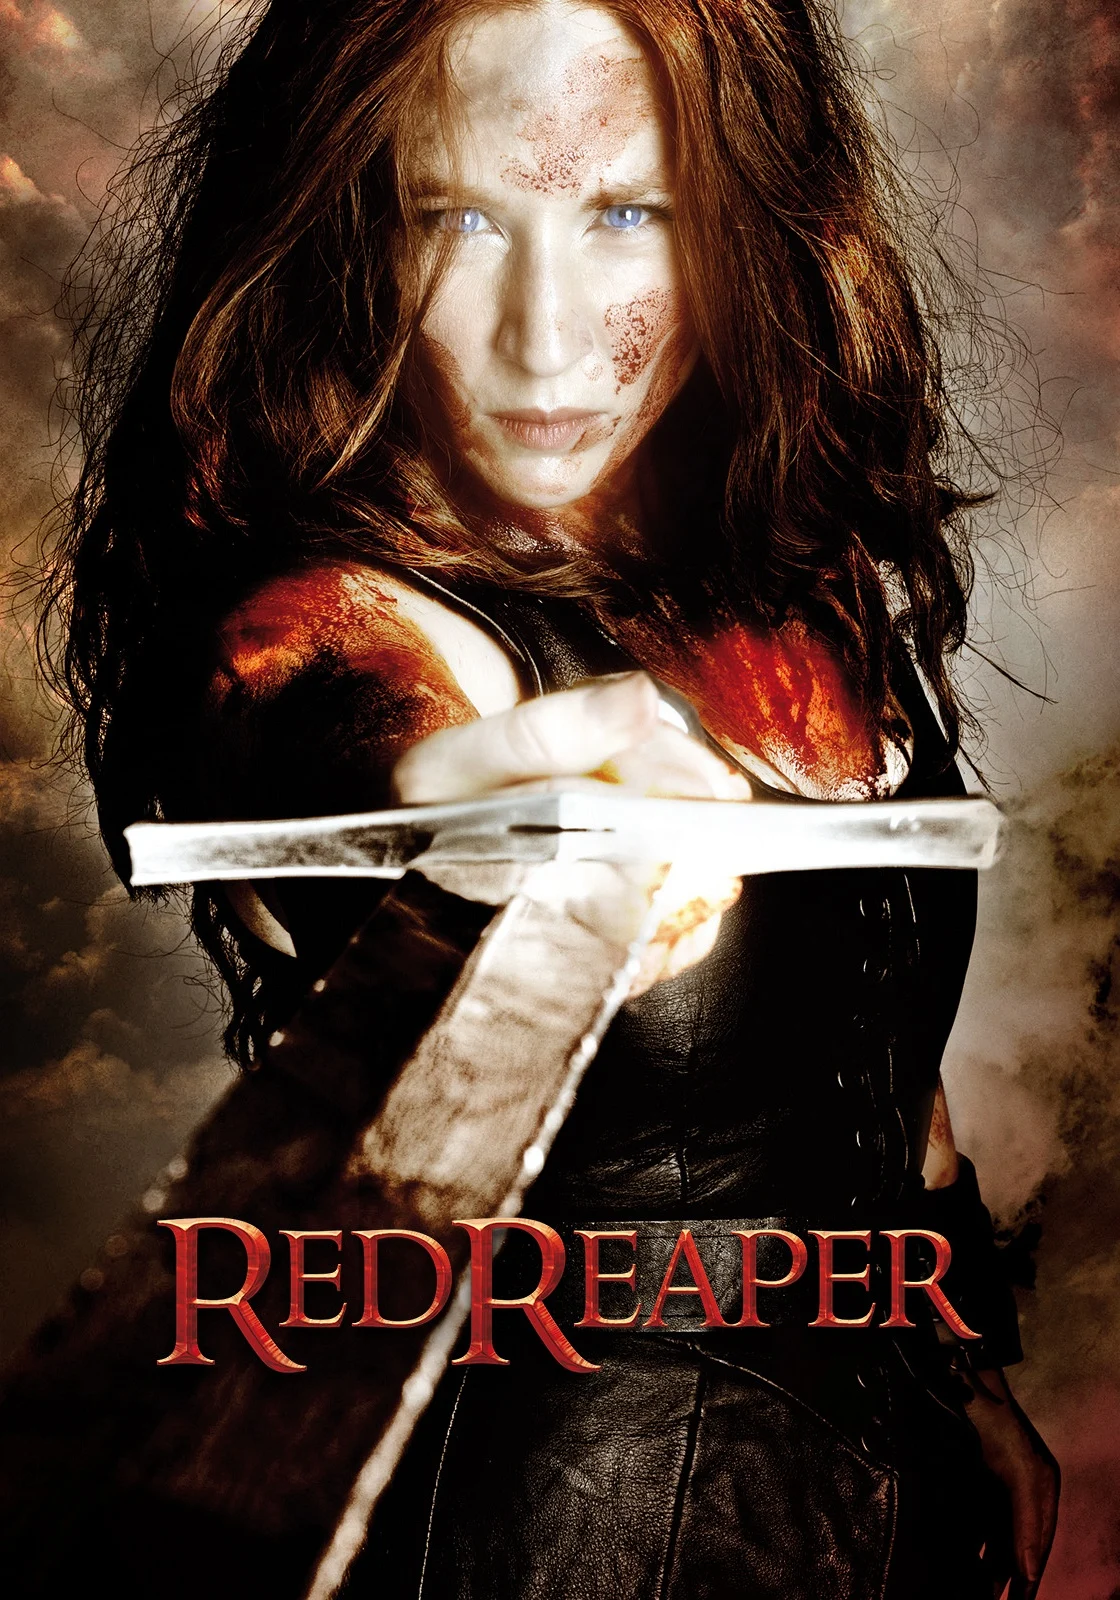 Red Reaper [HD] (2013)